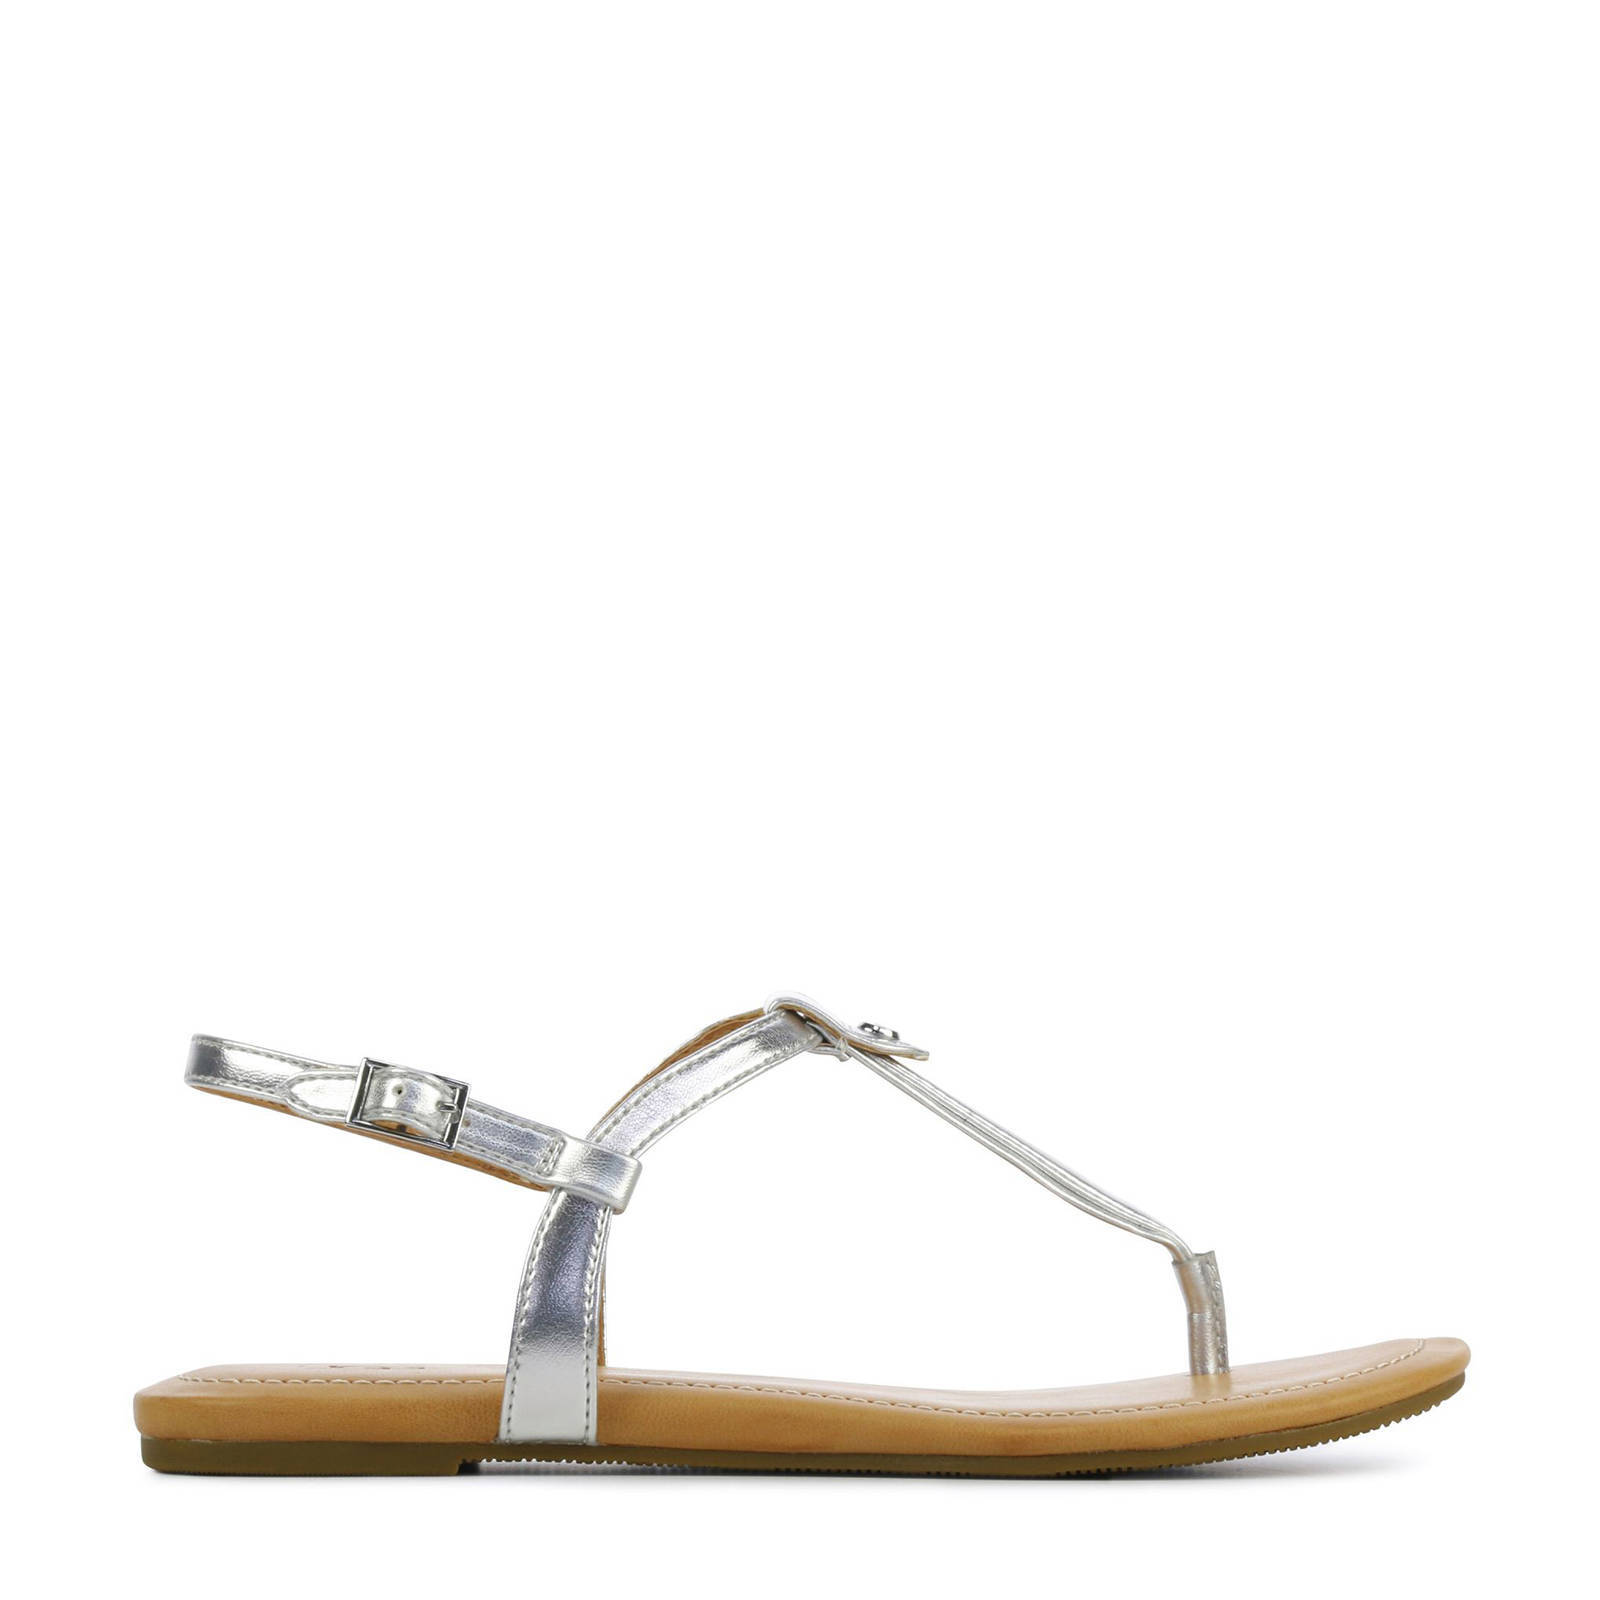 Ugg Australia Dames sandalen 1118516 online kopen